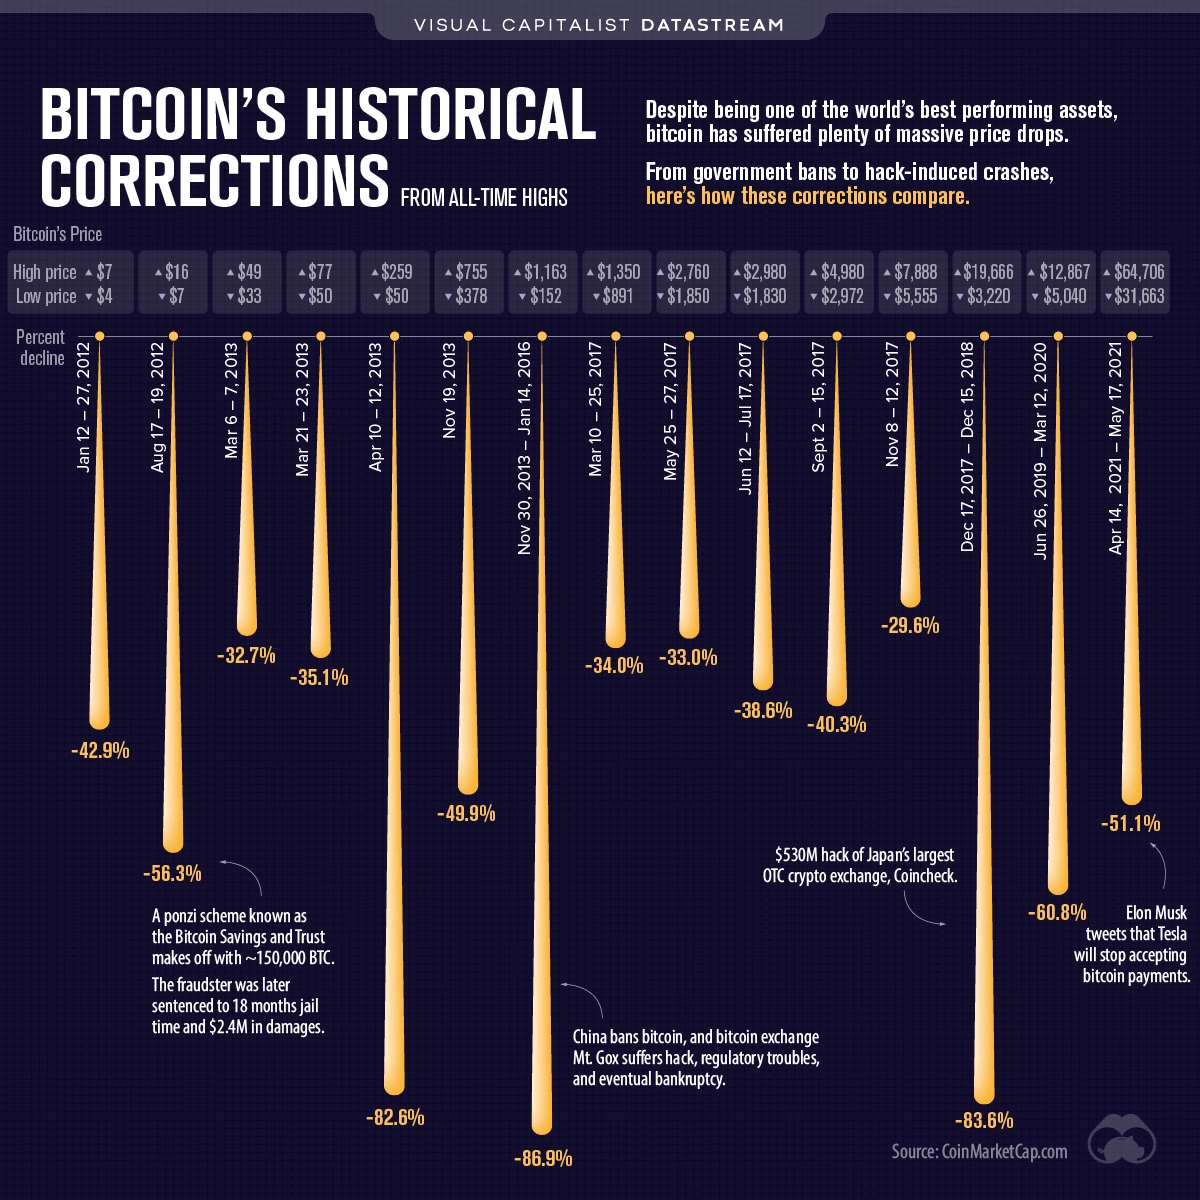 Bitcoins Historical Corrections